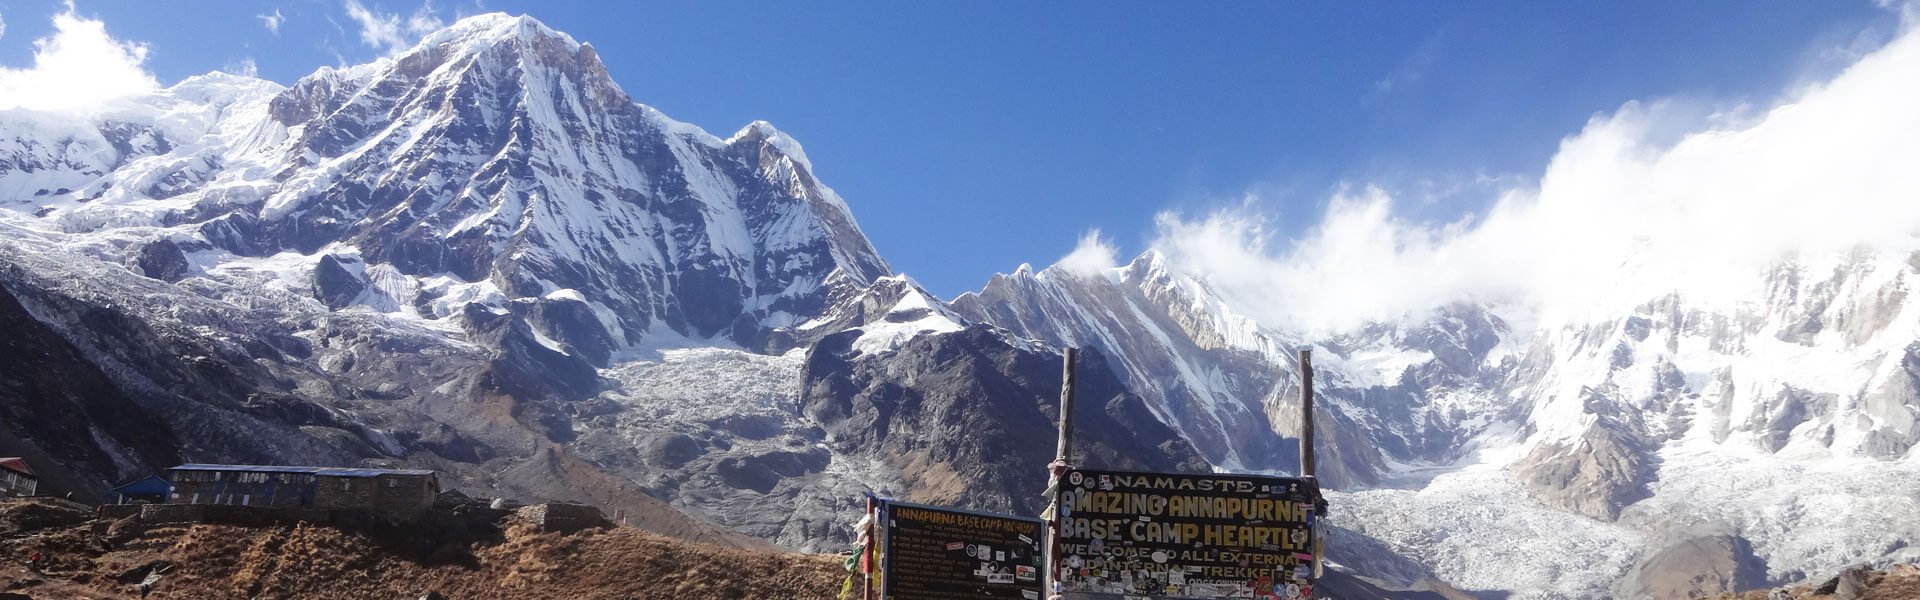 Trekking and Adventure in Nepal